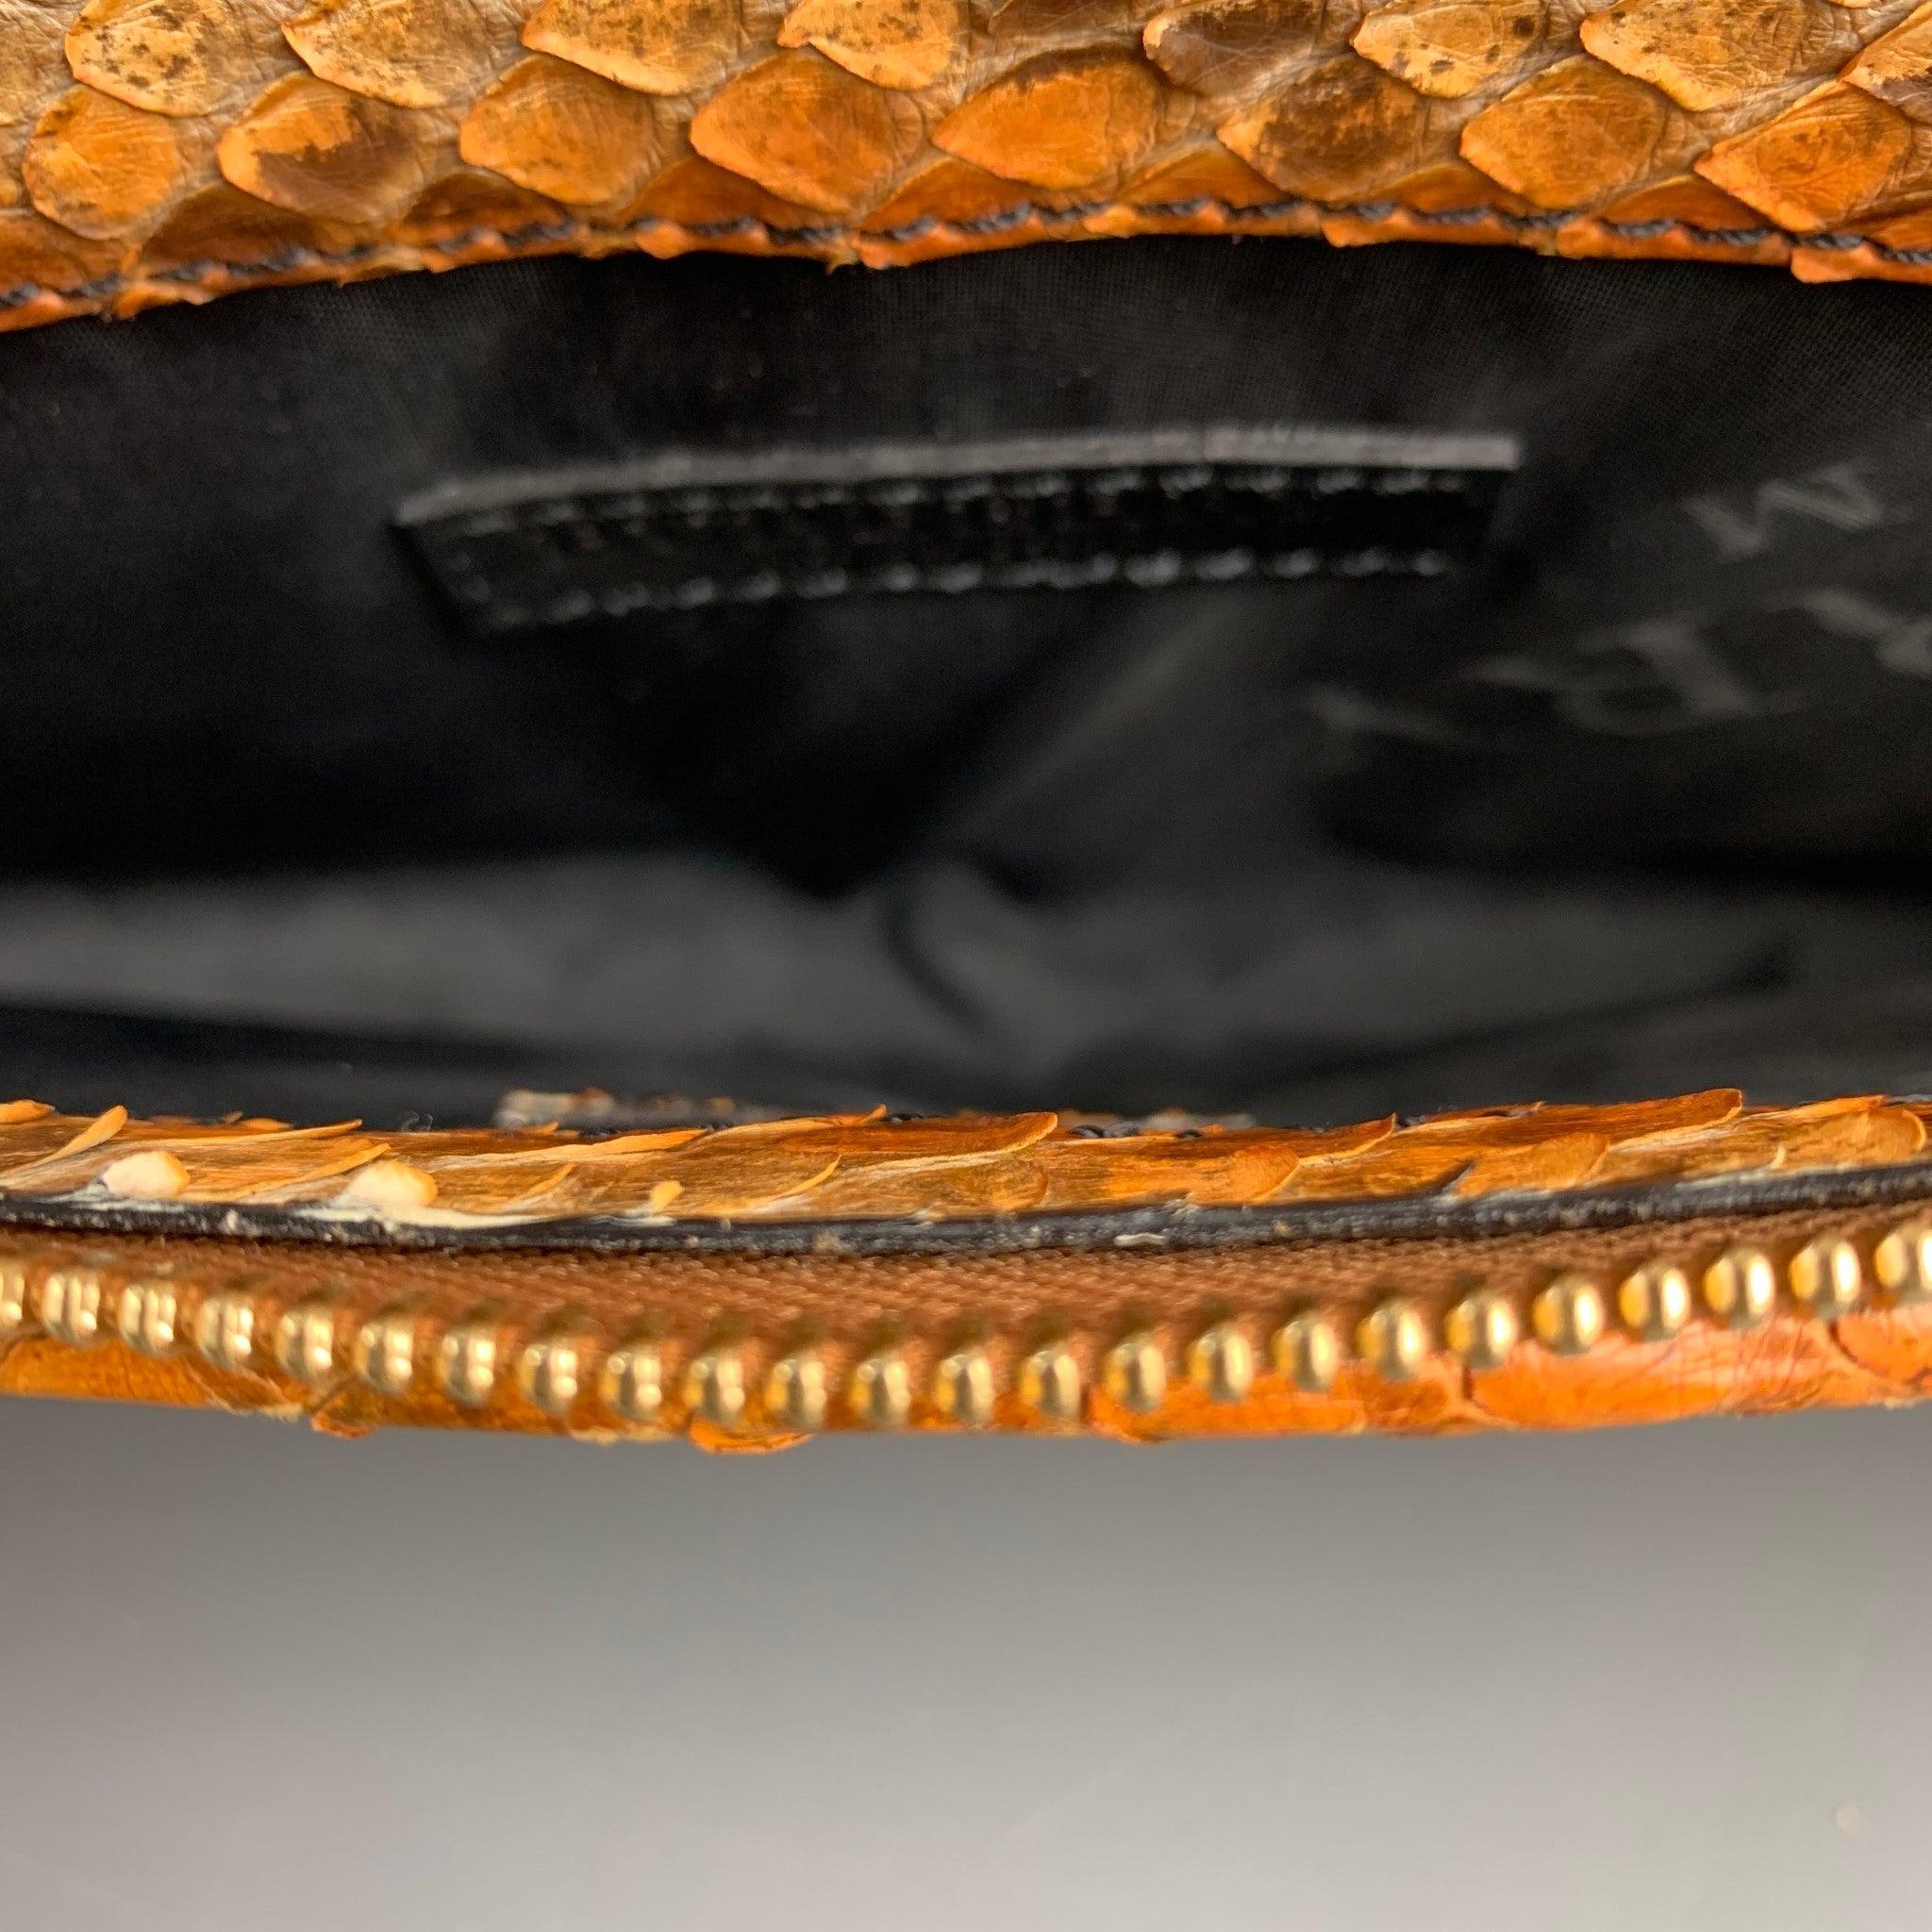 BURBERRY PRORSUM Brown & Tan Python Skin Leather Clutch Shoulder Bag For Sale 2